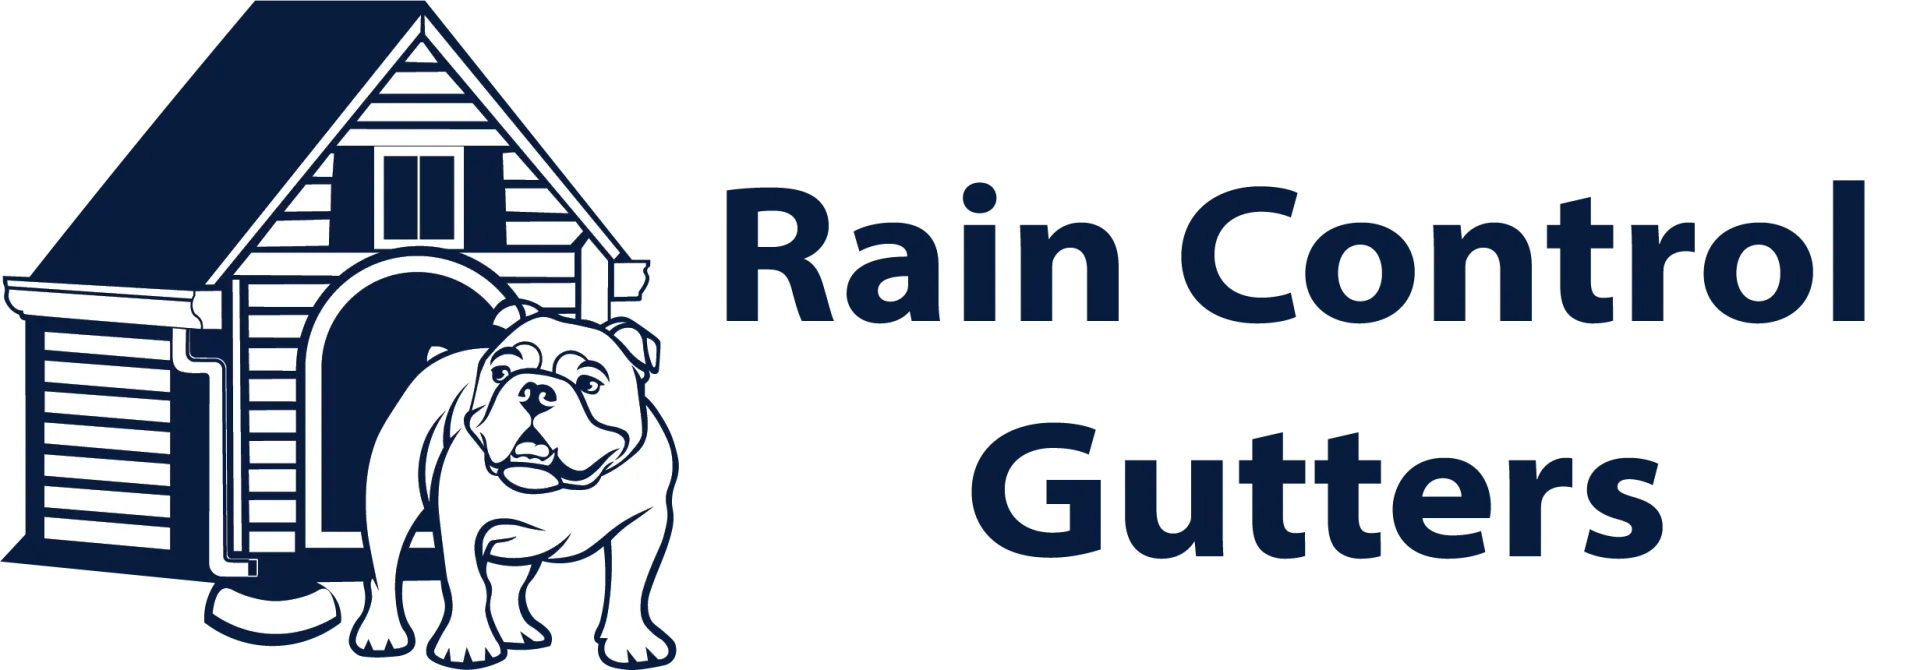 Rain Control Gutters Logo